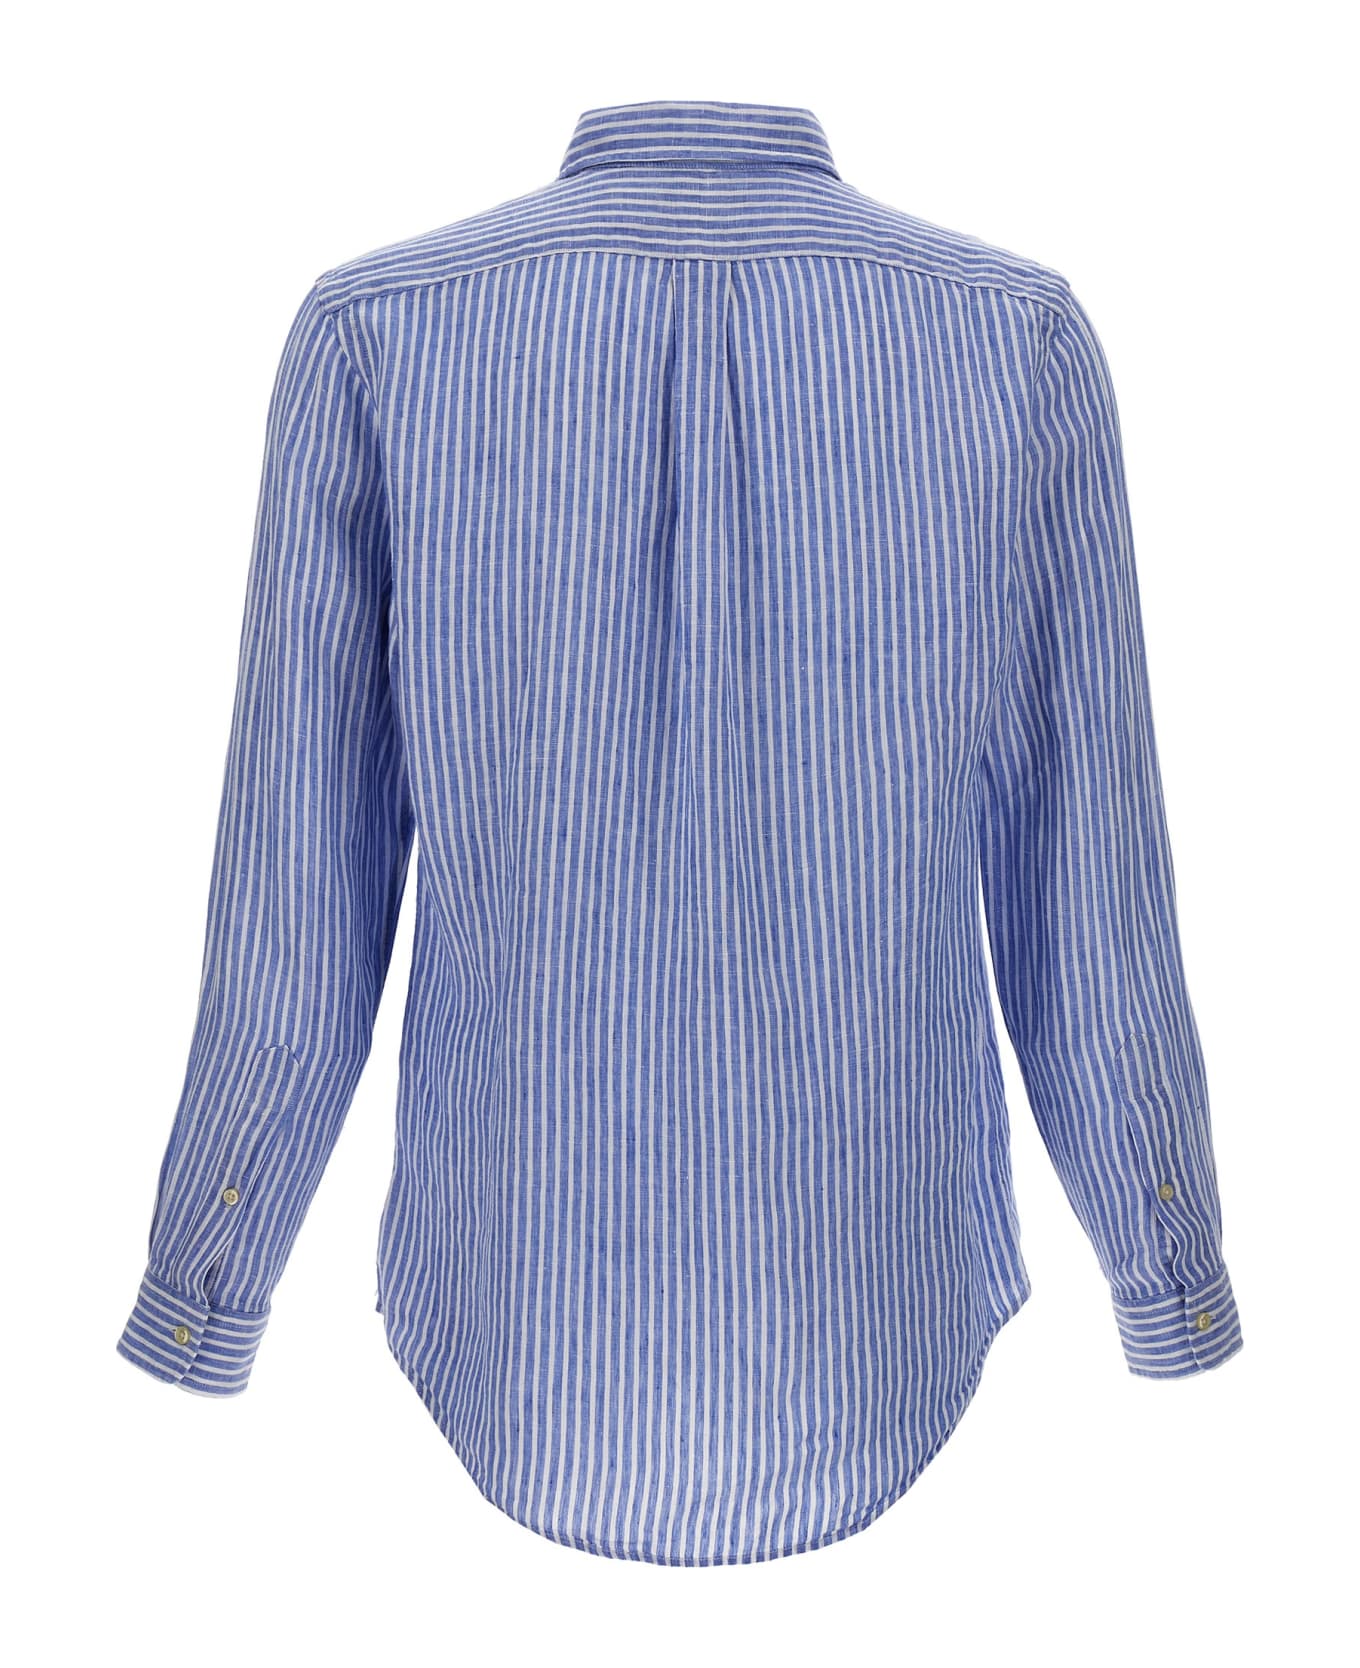 Ralph Lauren Logo Embroidery Striped Shirt - Multi シャツ